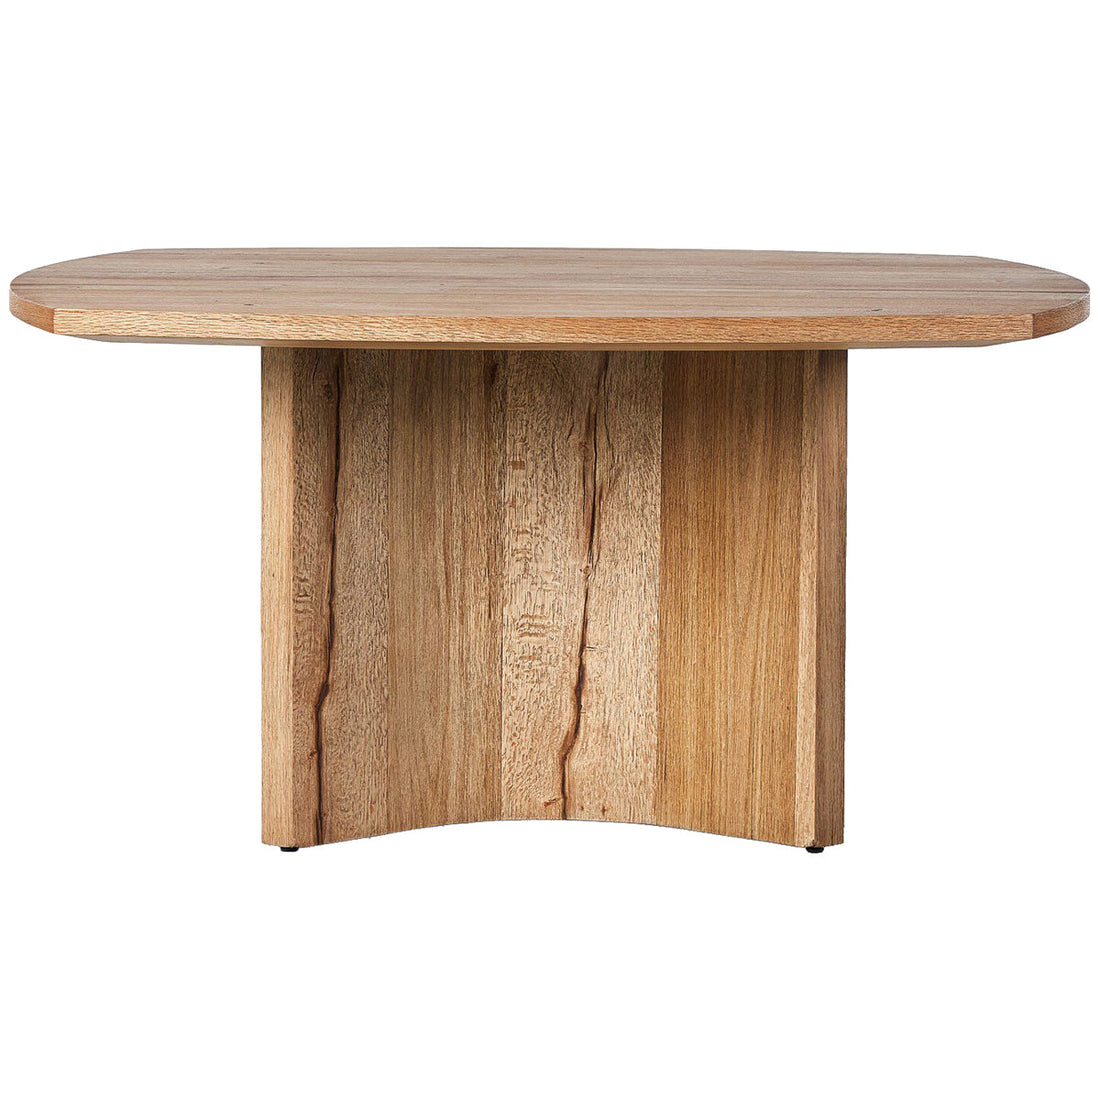 Four Hands Square Dining Table - Rustic Oak Veneer